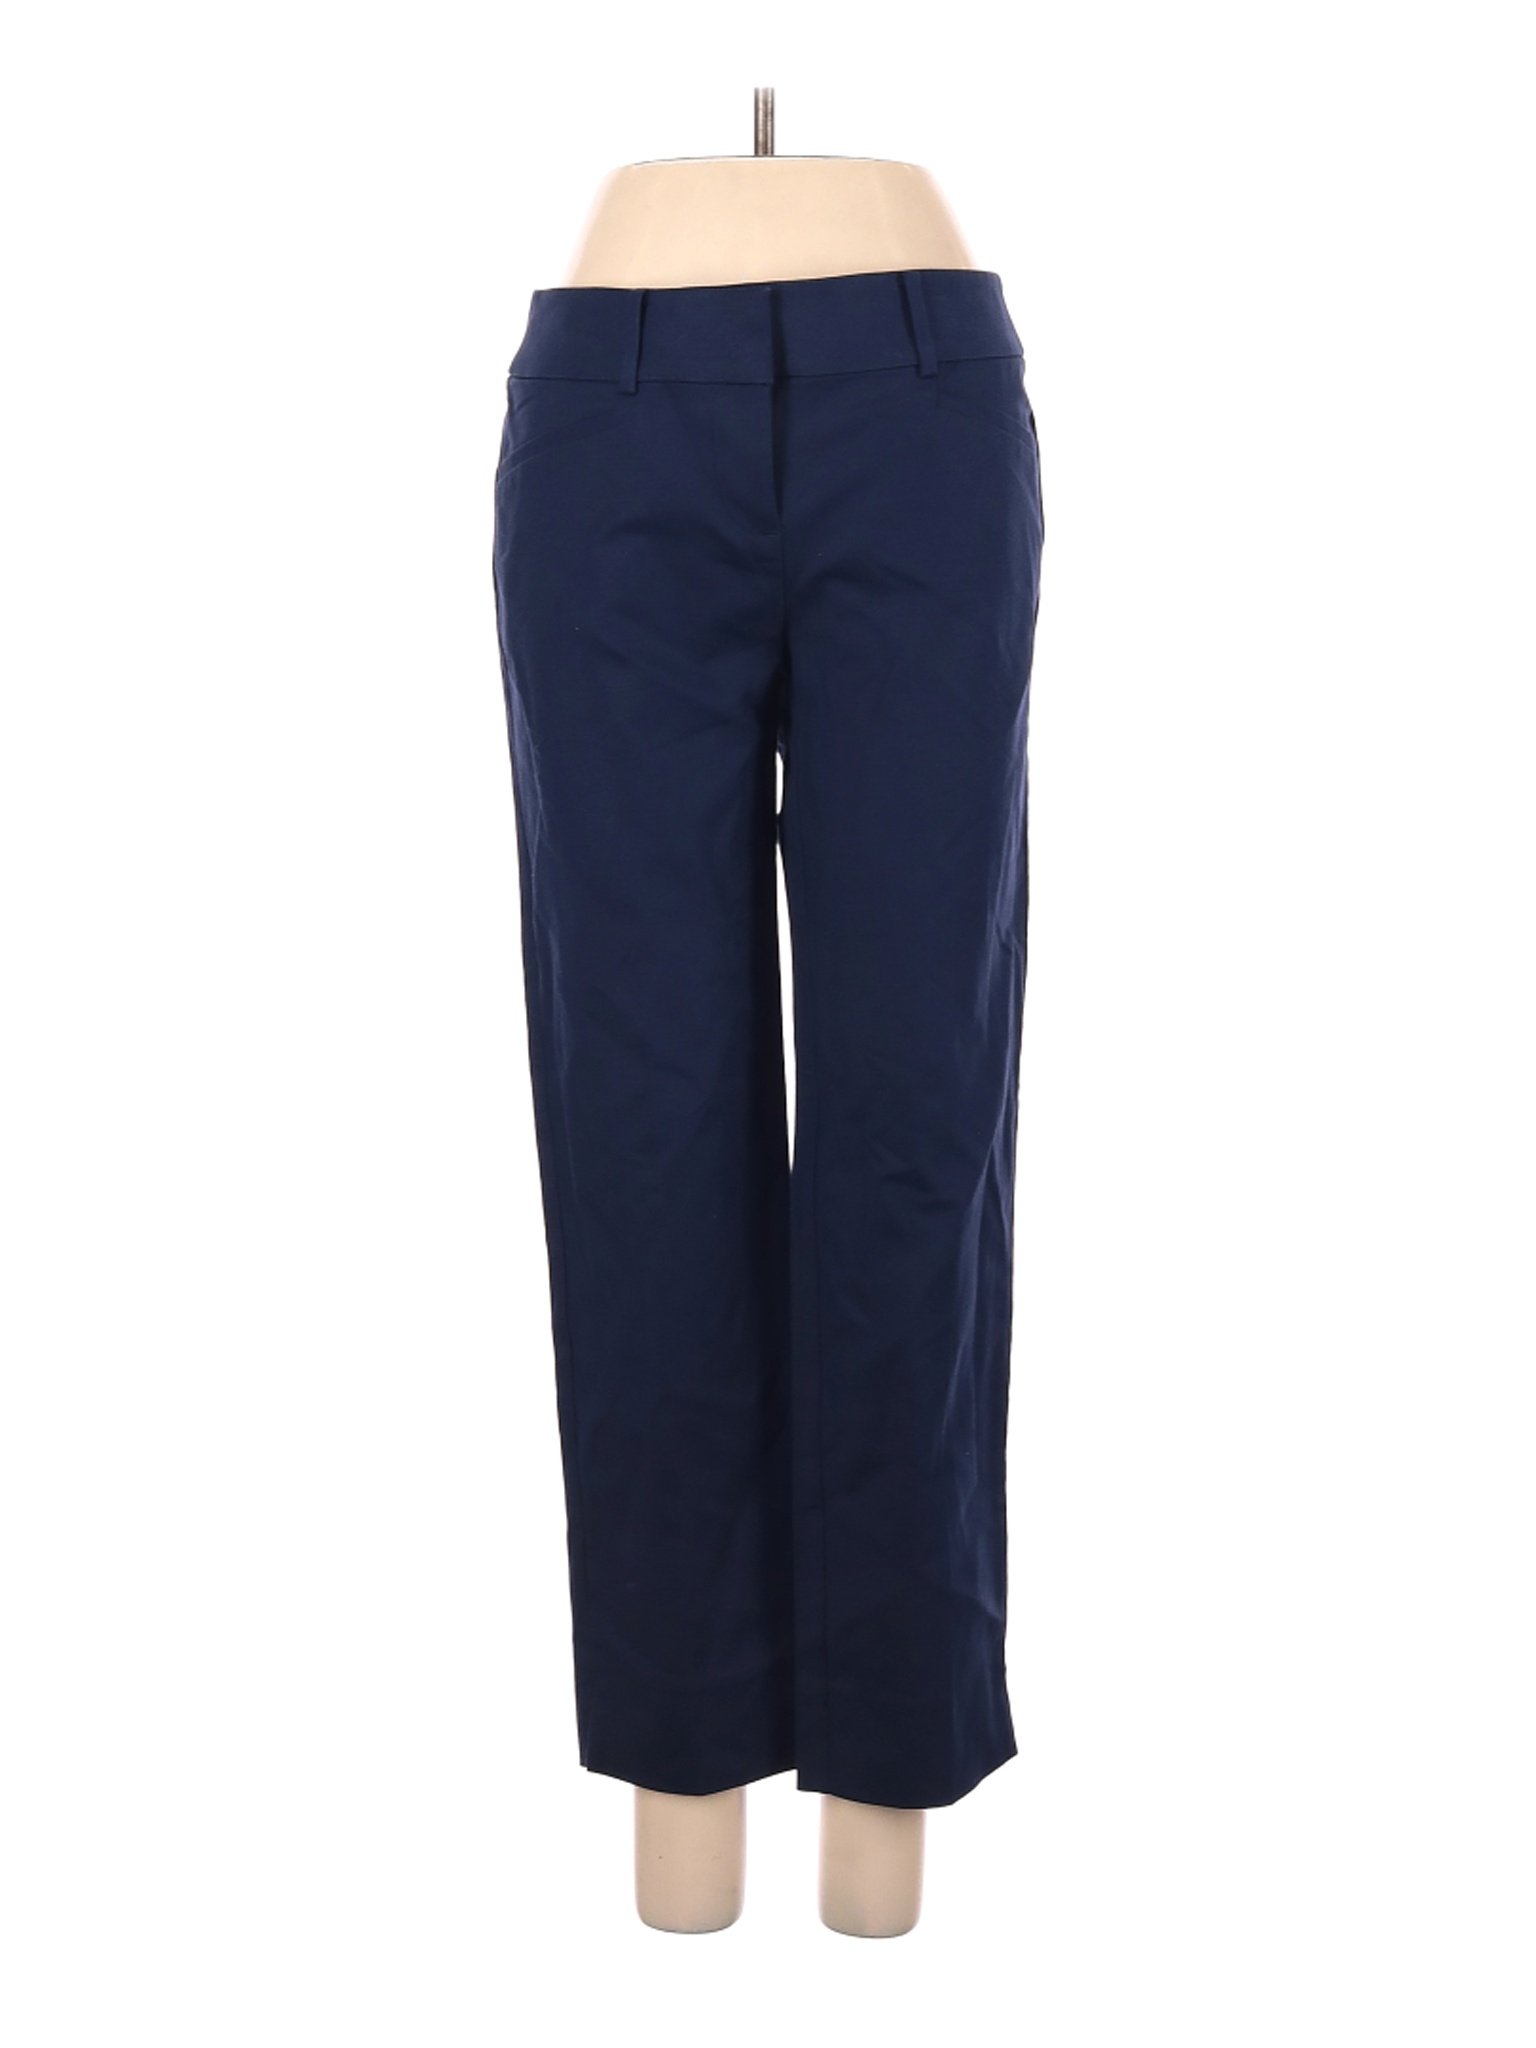 NWT Ann Taylor LOFT Women Blue Casual Pants 0 | eBay